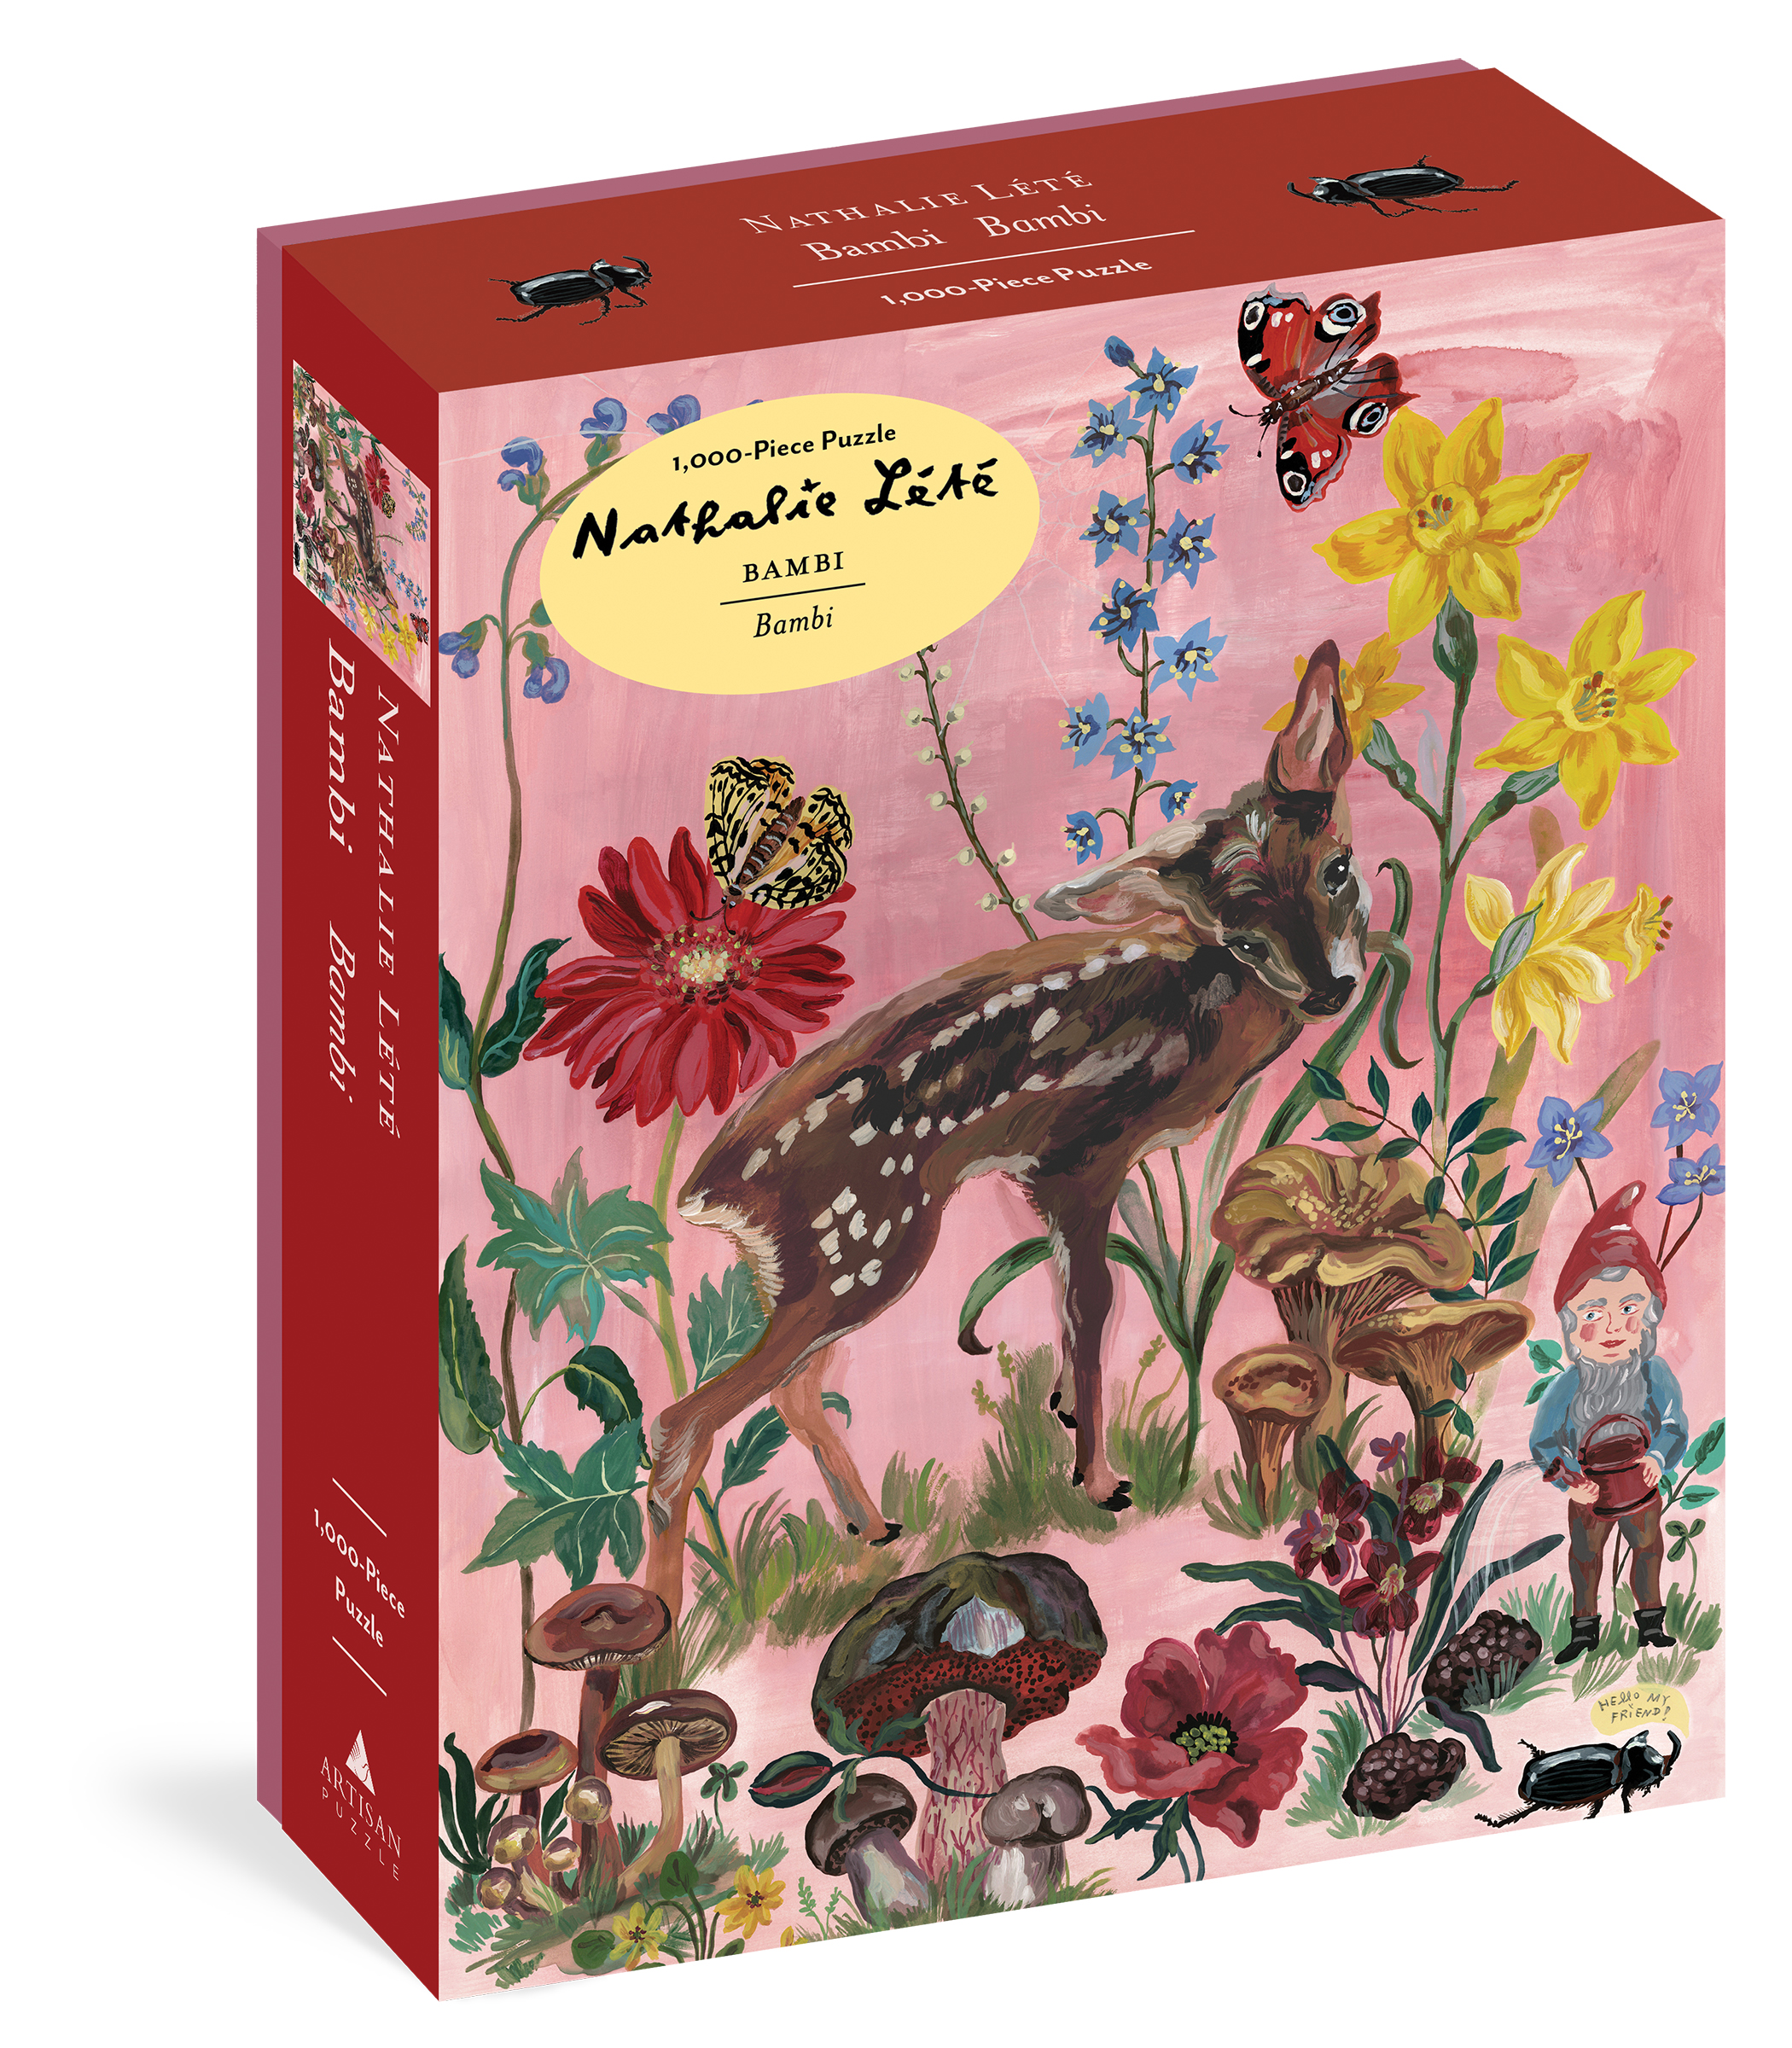 Relatief Ru Schrijf een brief Nathalie Lété: Bambi 1,000-Piece Puzzle by Nathalie Lété | Hachette Book  Group